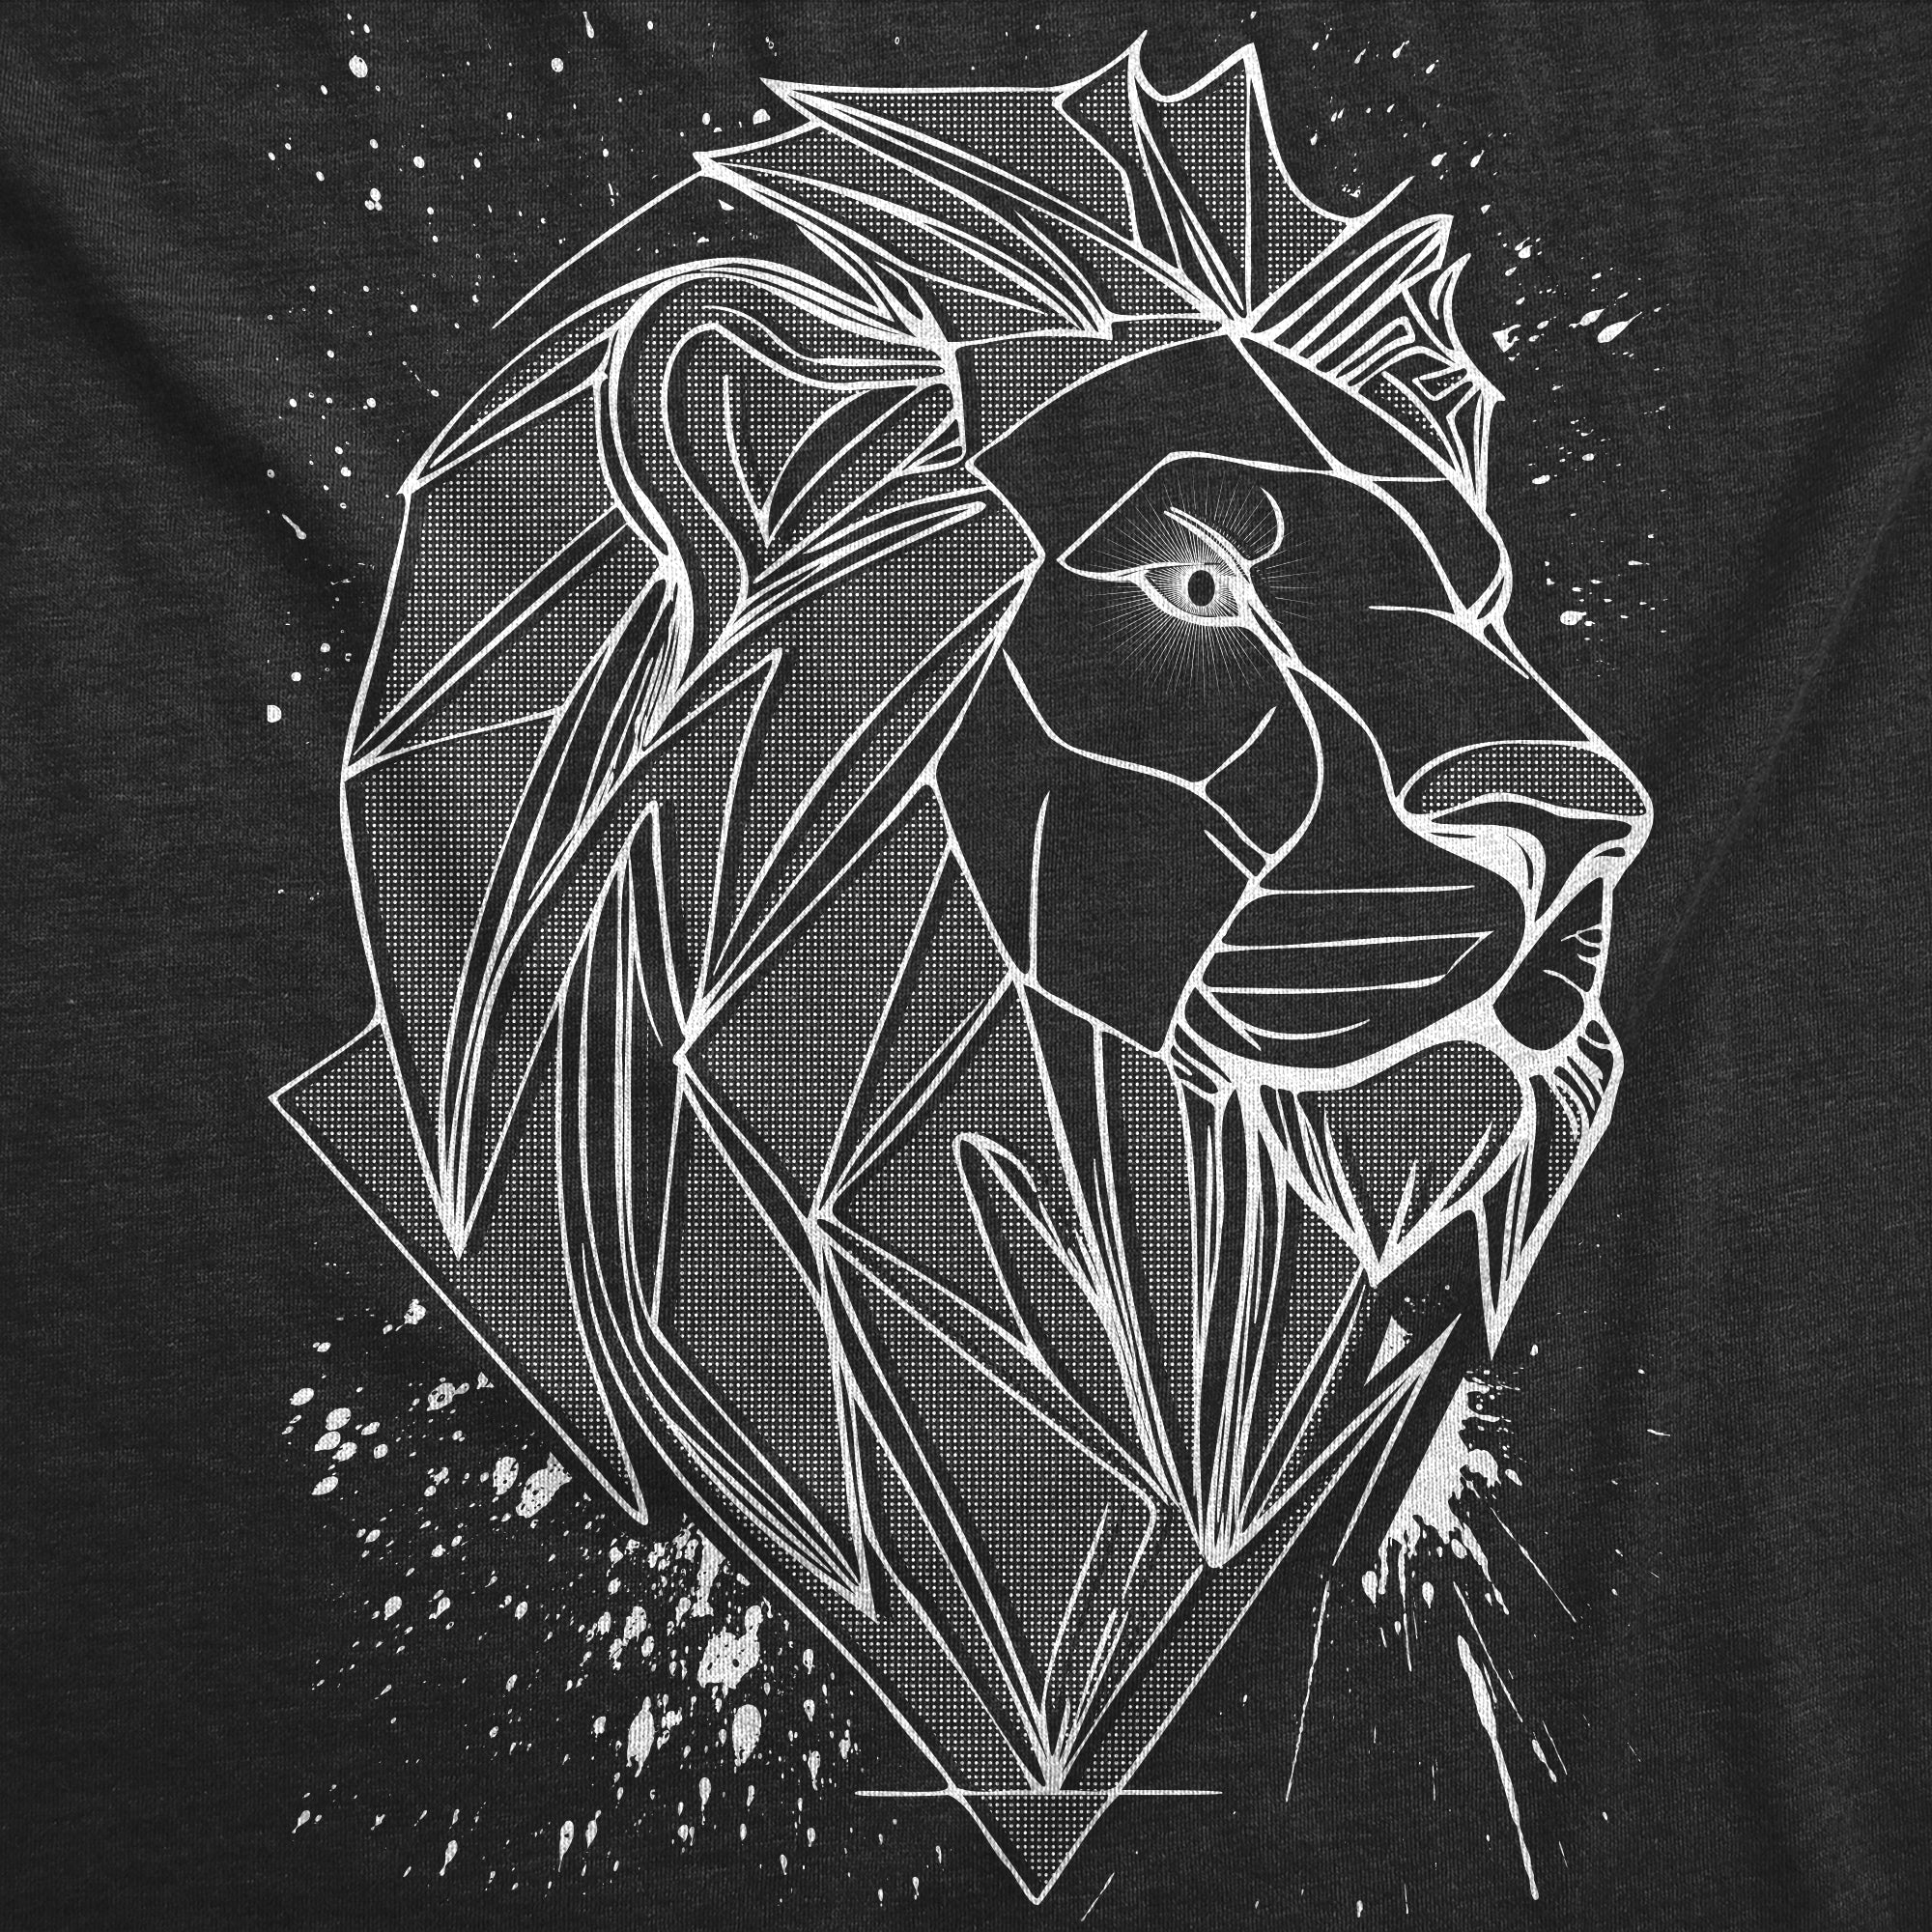 Funny Heather Black - 3D Lion 3D Lion Mens T Shirt Nerdy animal Tee